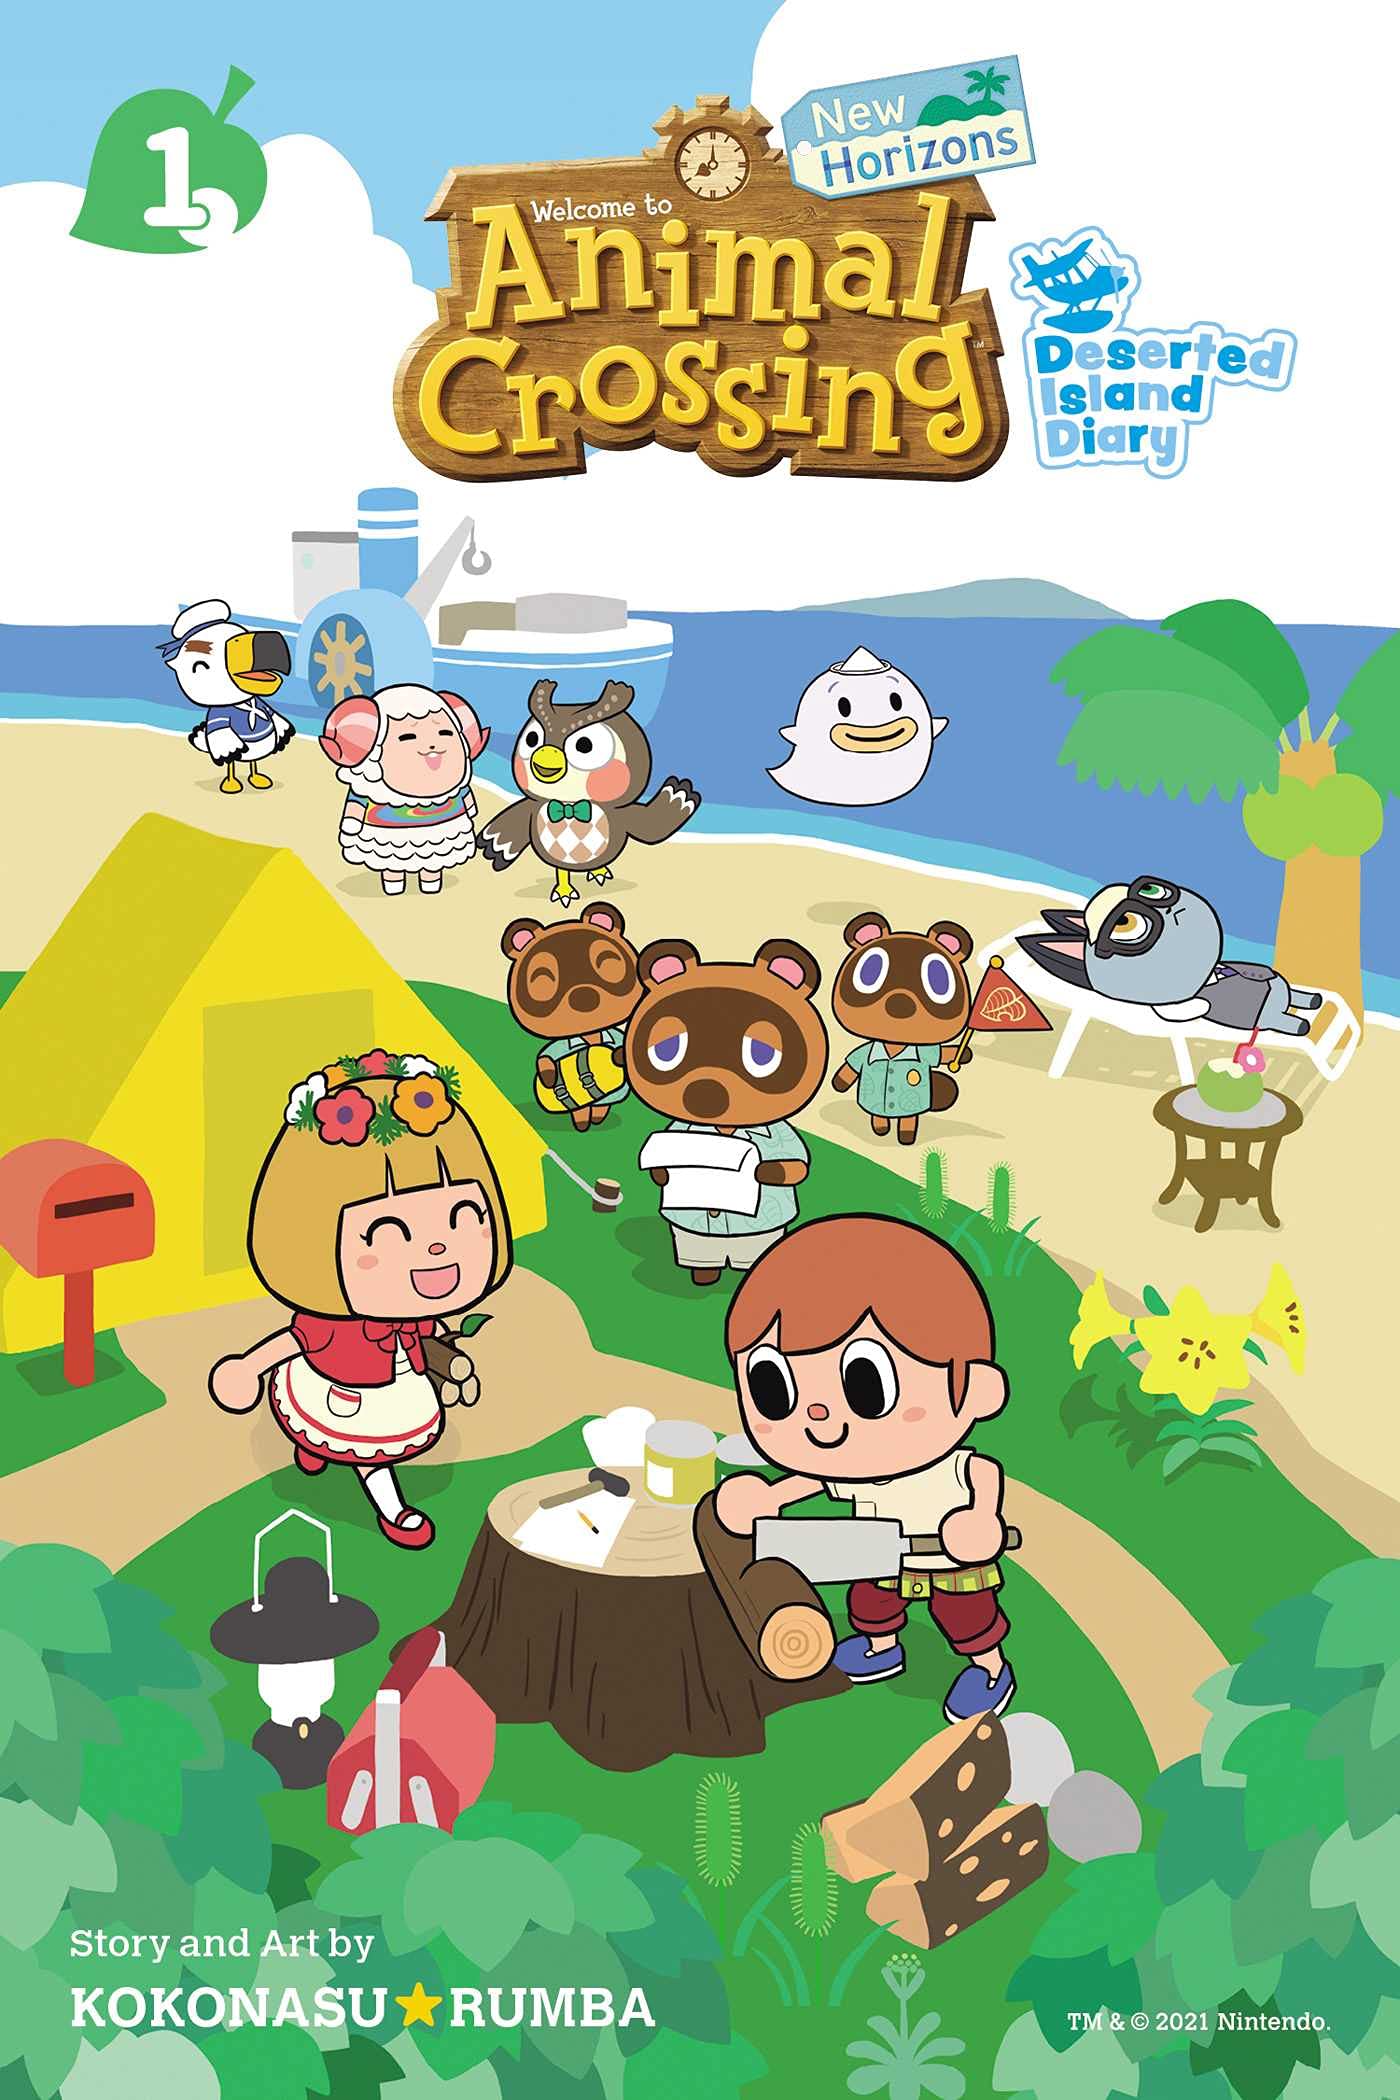 Cover of “Animal Crossing: New Horizons, Vol. 1” by Kokonasu Rumba